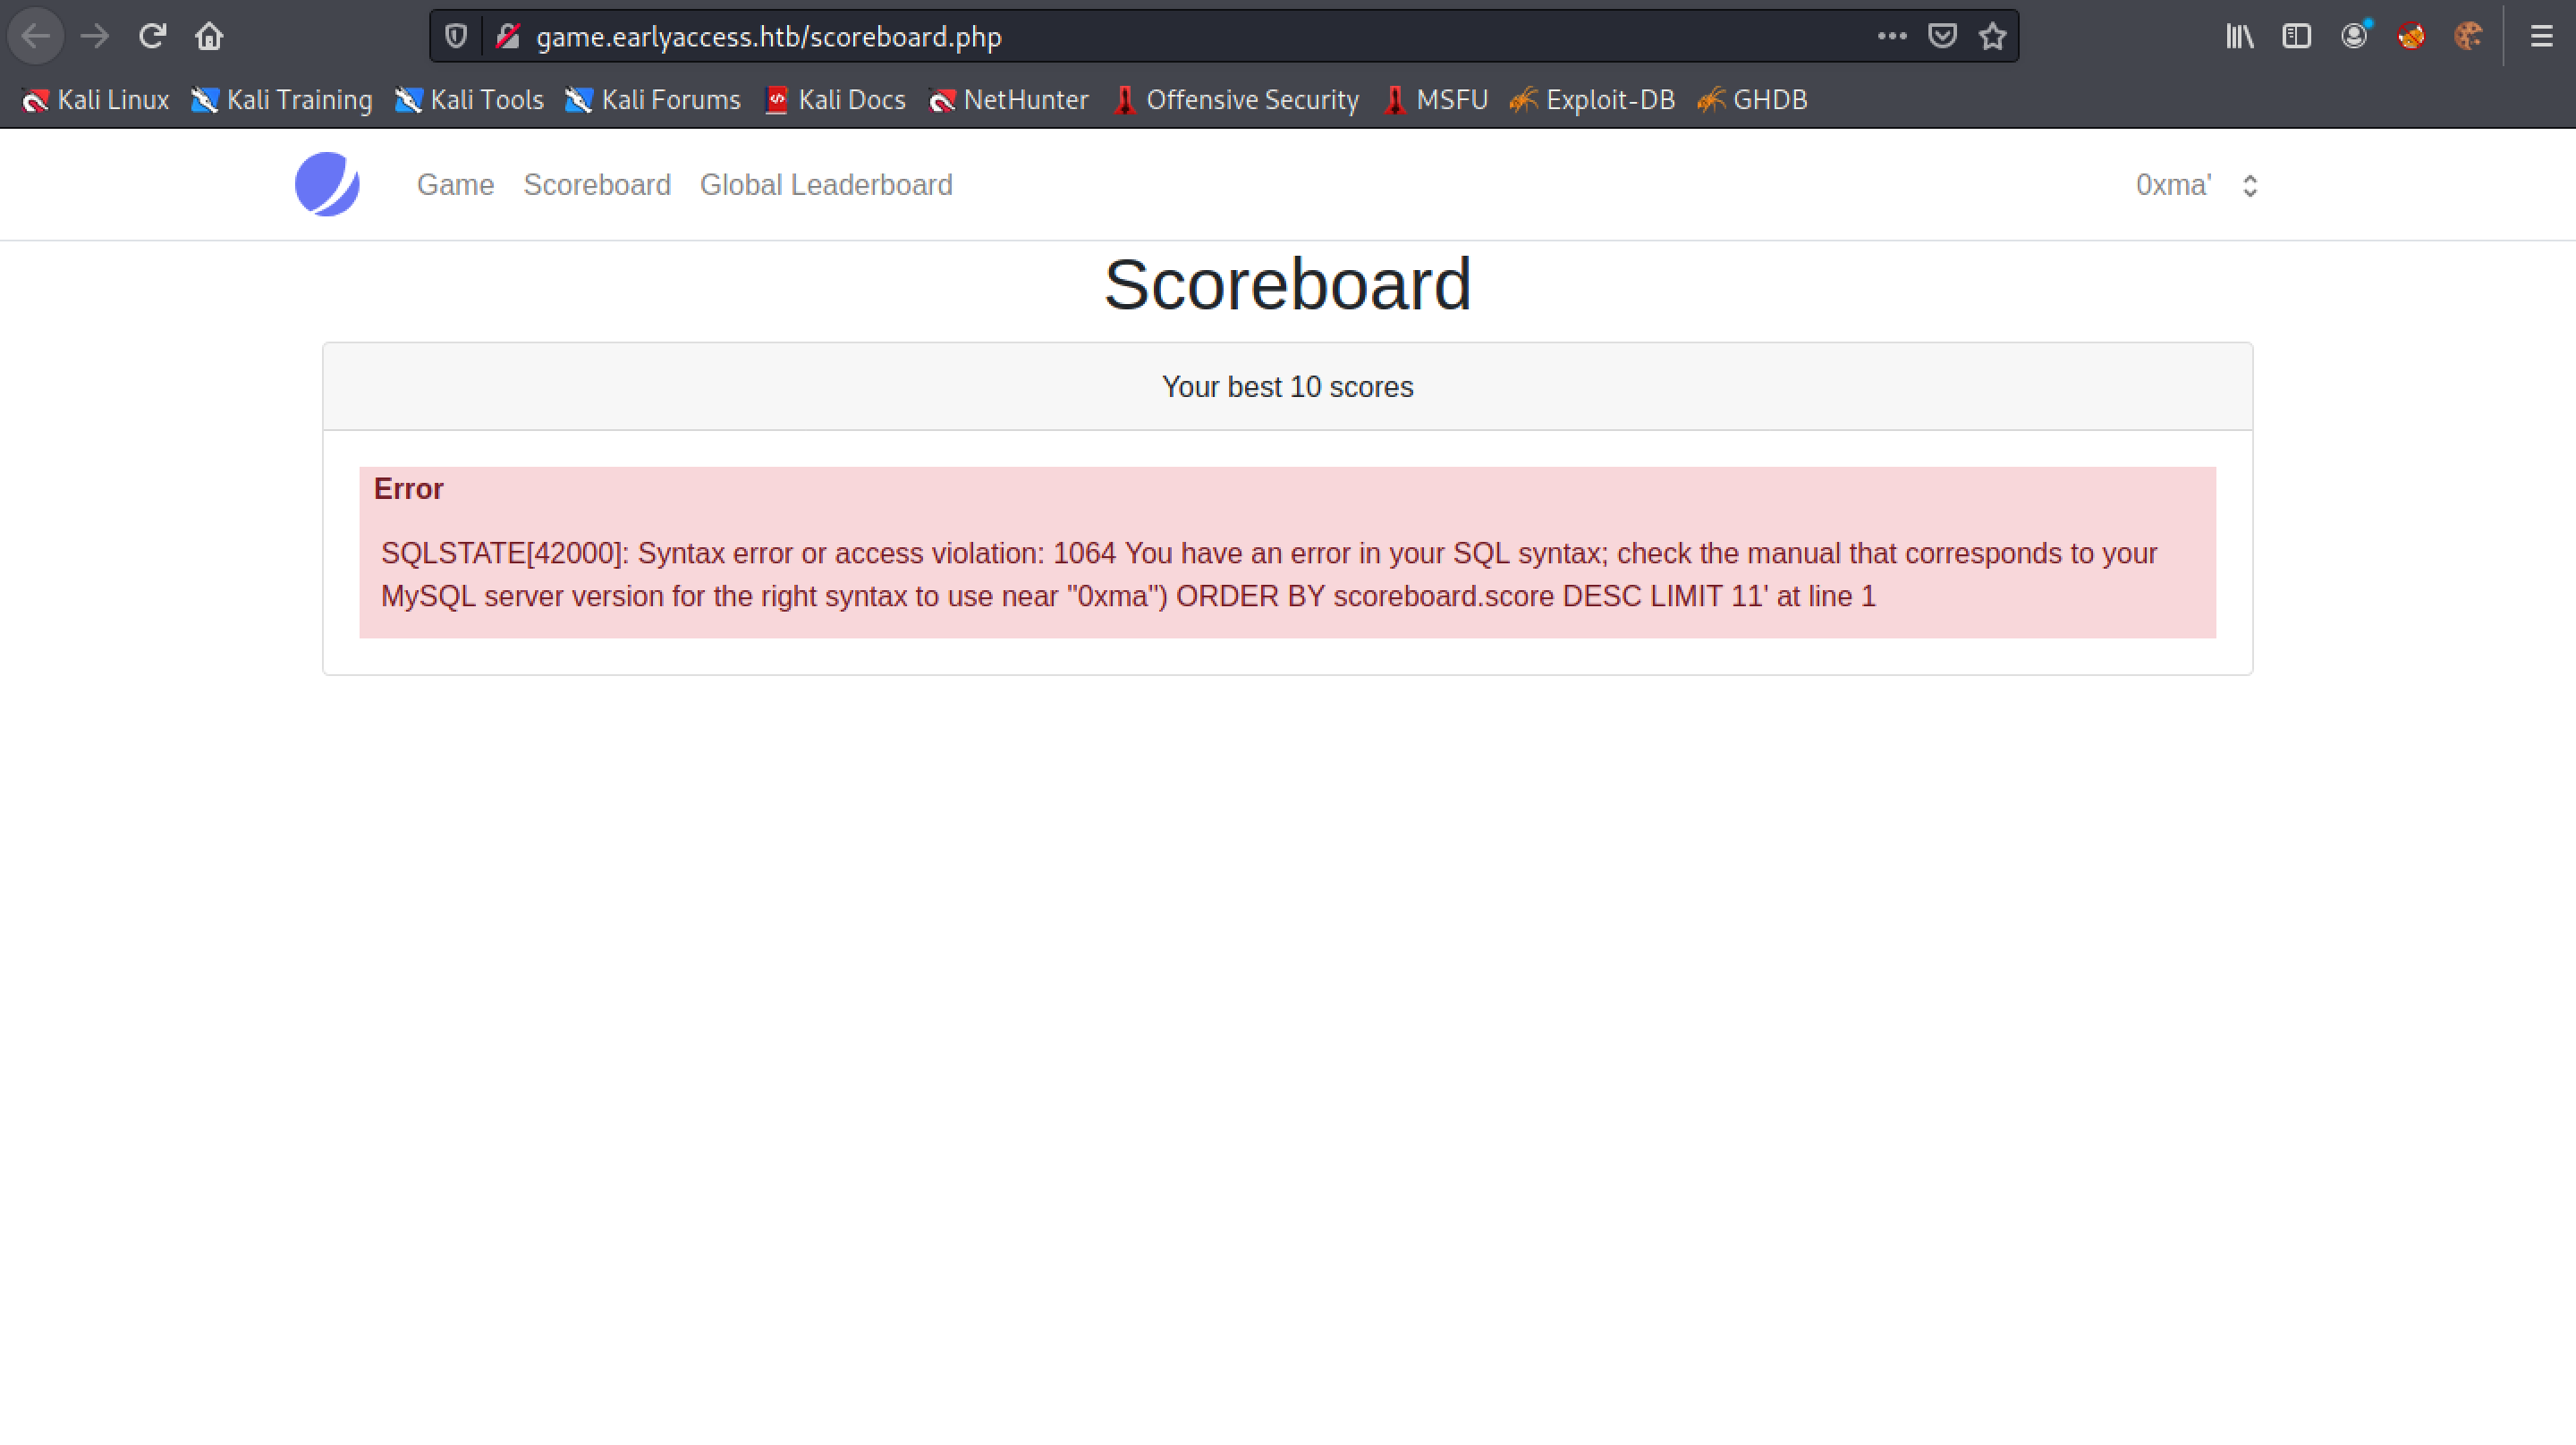 SQL syntax error in the Scoreboard page.